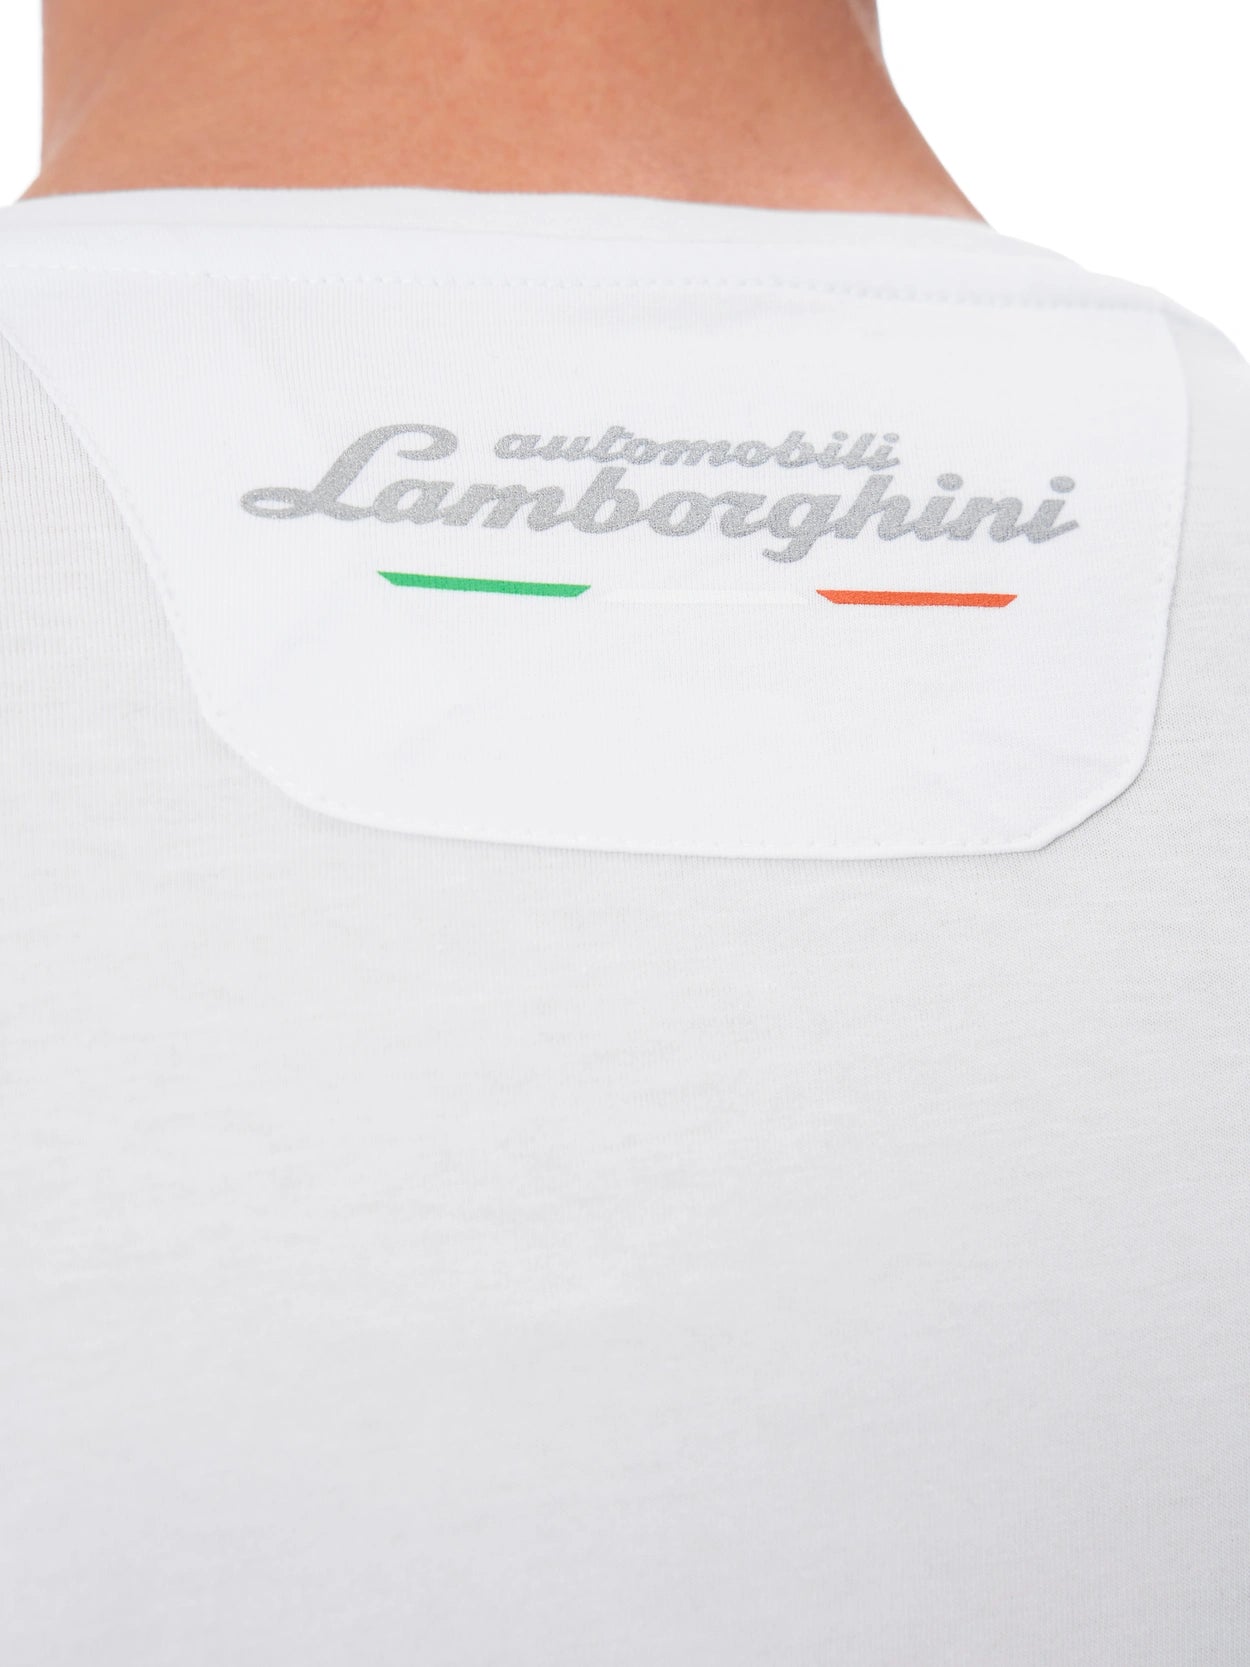 Automobili Lamborghini Iconic Big Shield Men's Crew Neck T-shirt - White